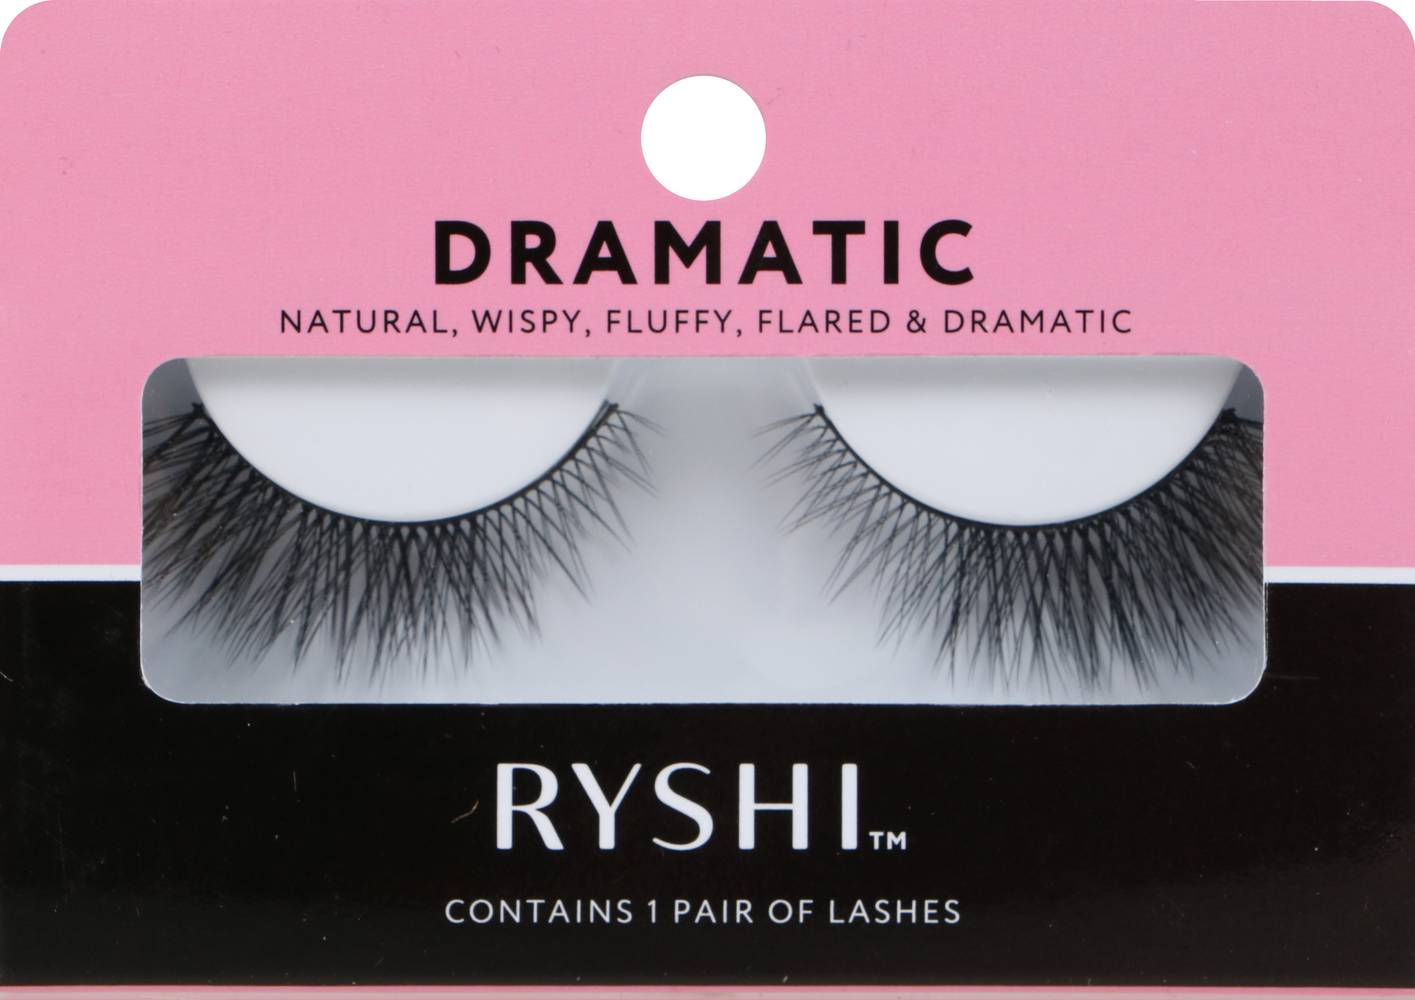 Ryshi Eye Lashes Dramatic - 1 Pair